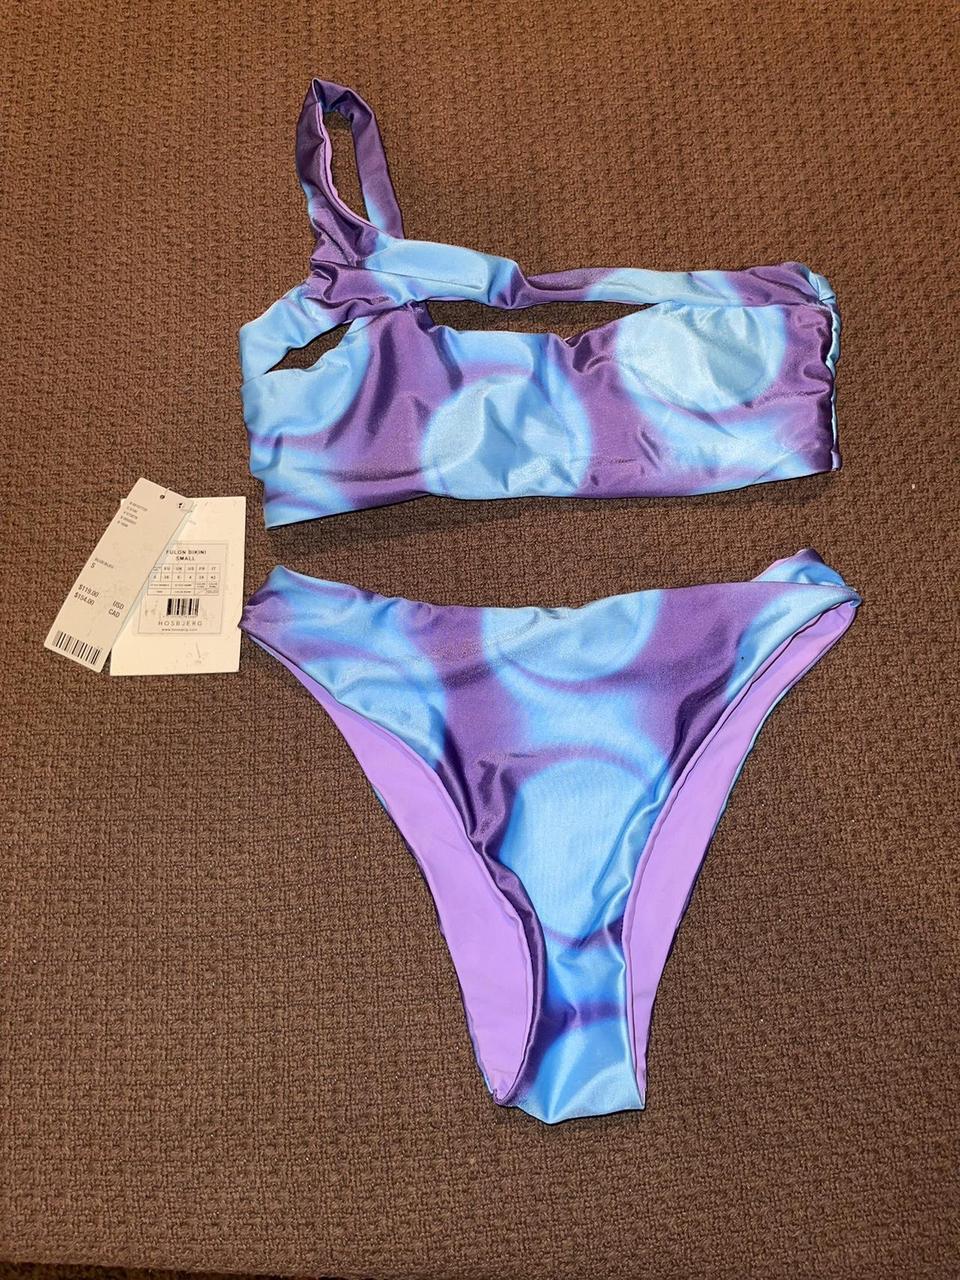 Hosbjerg Women's Blue and Purple Swimsuit-one-piece